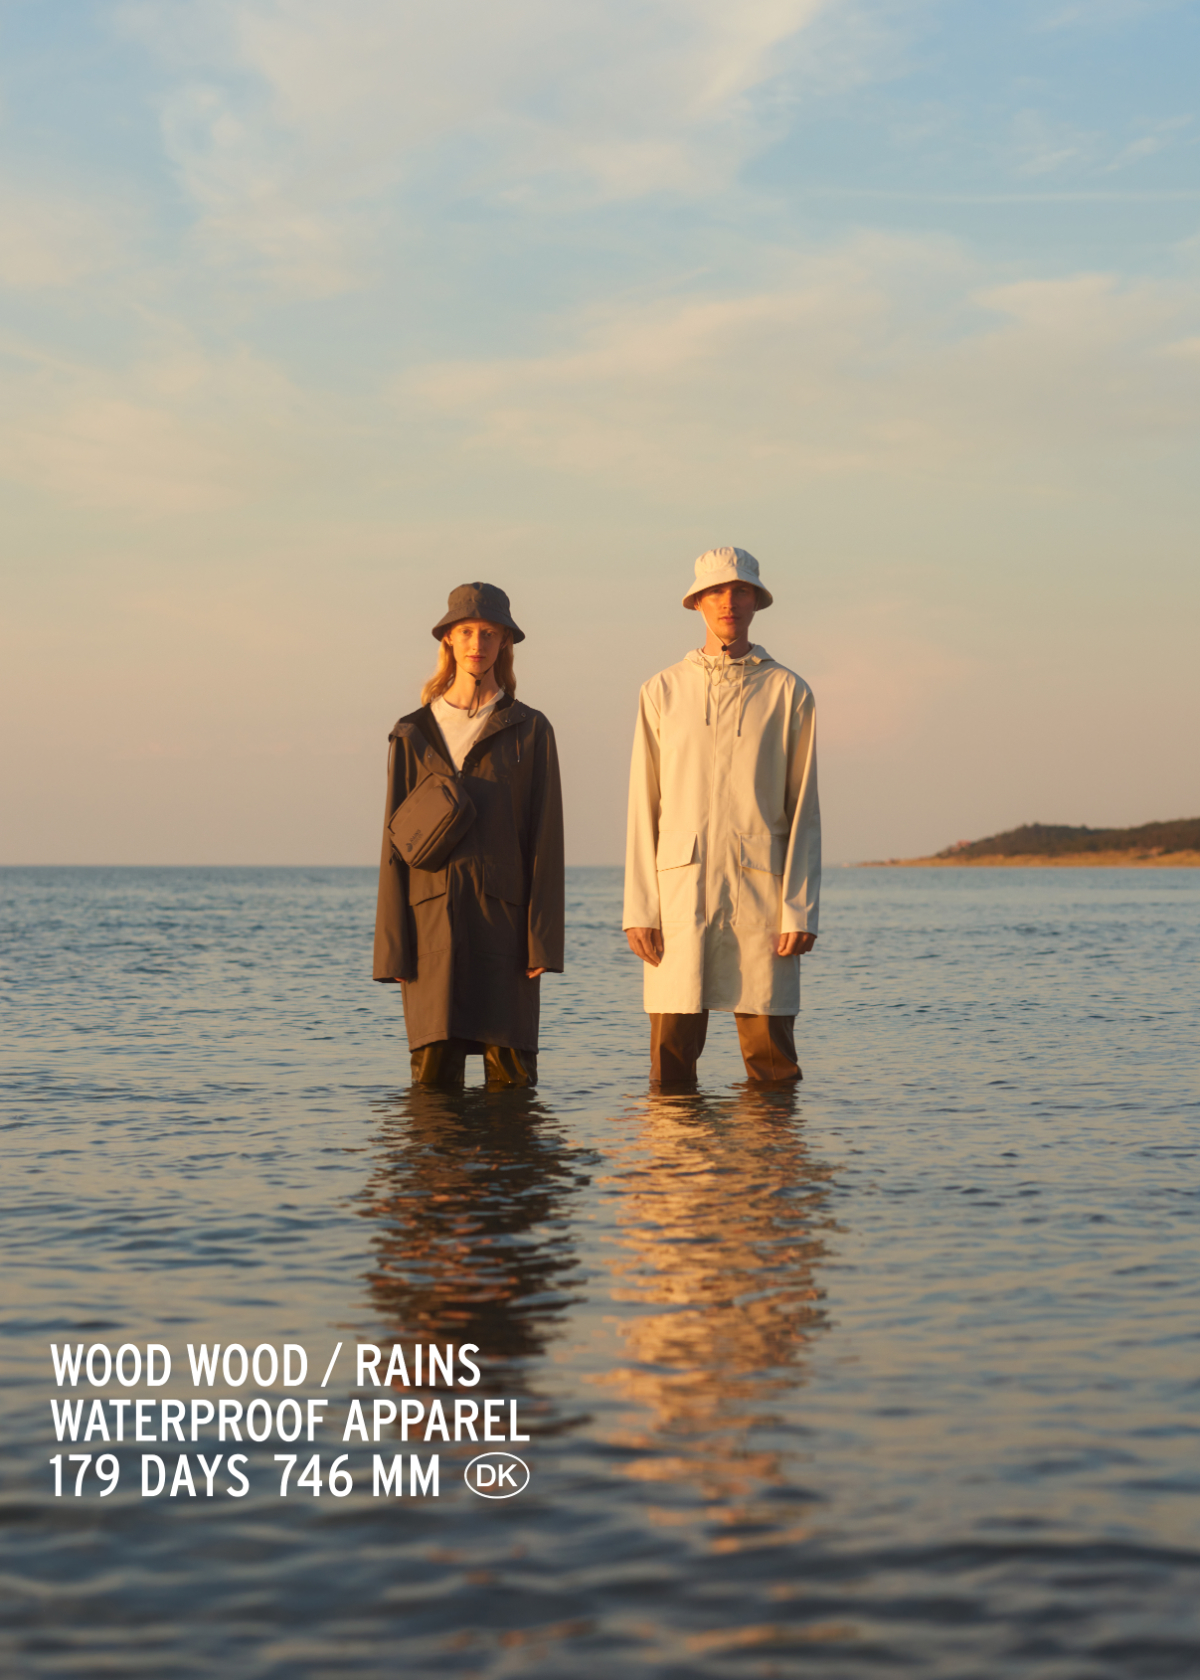 Wood Wood and Rains Create Scandinavian-Themed Rain-Wear